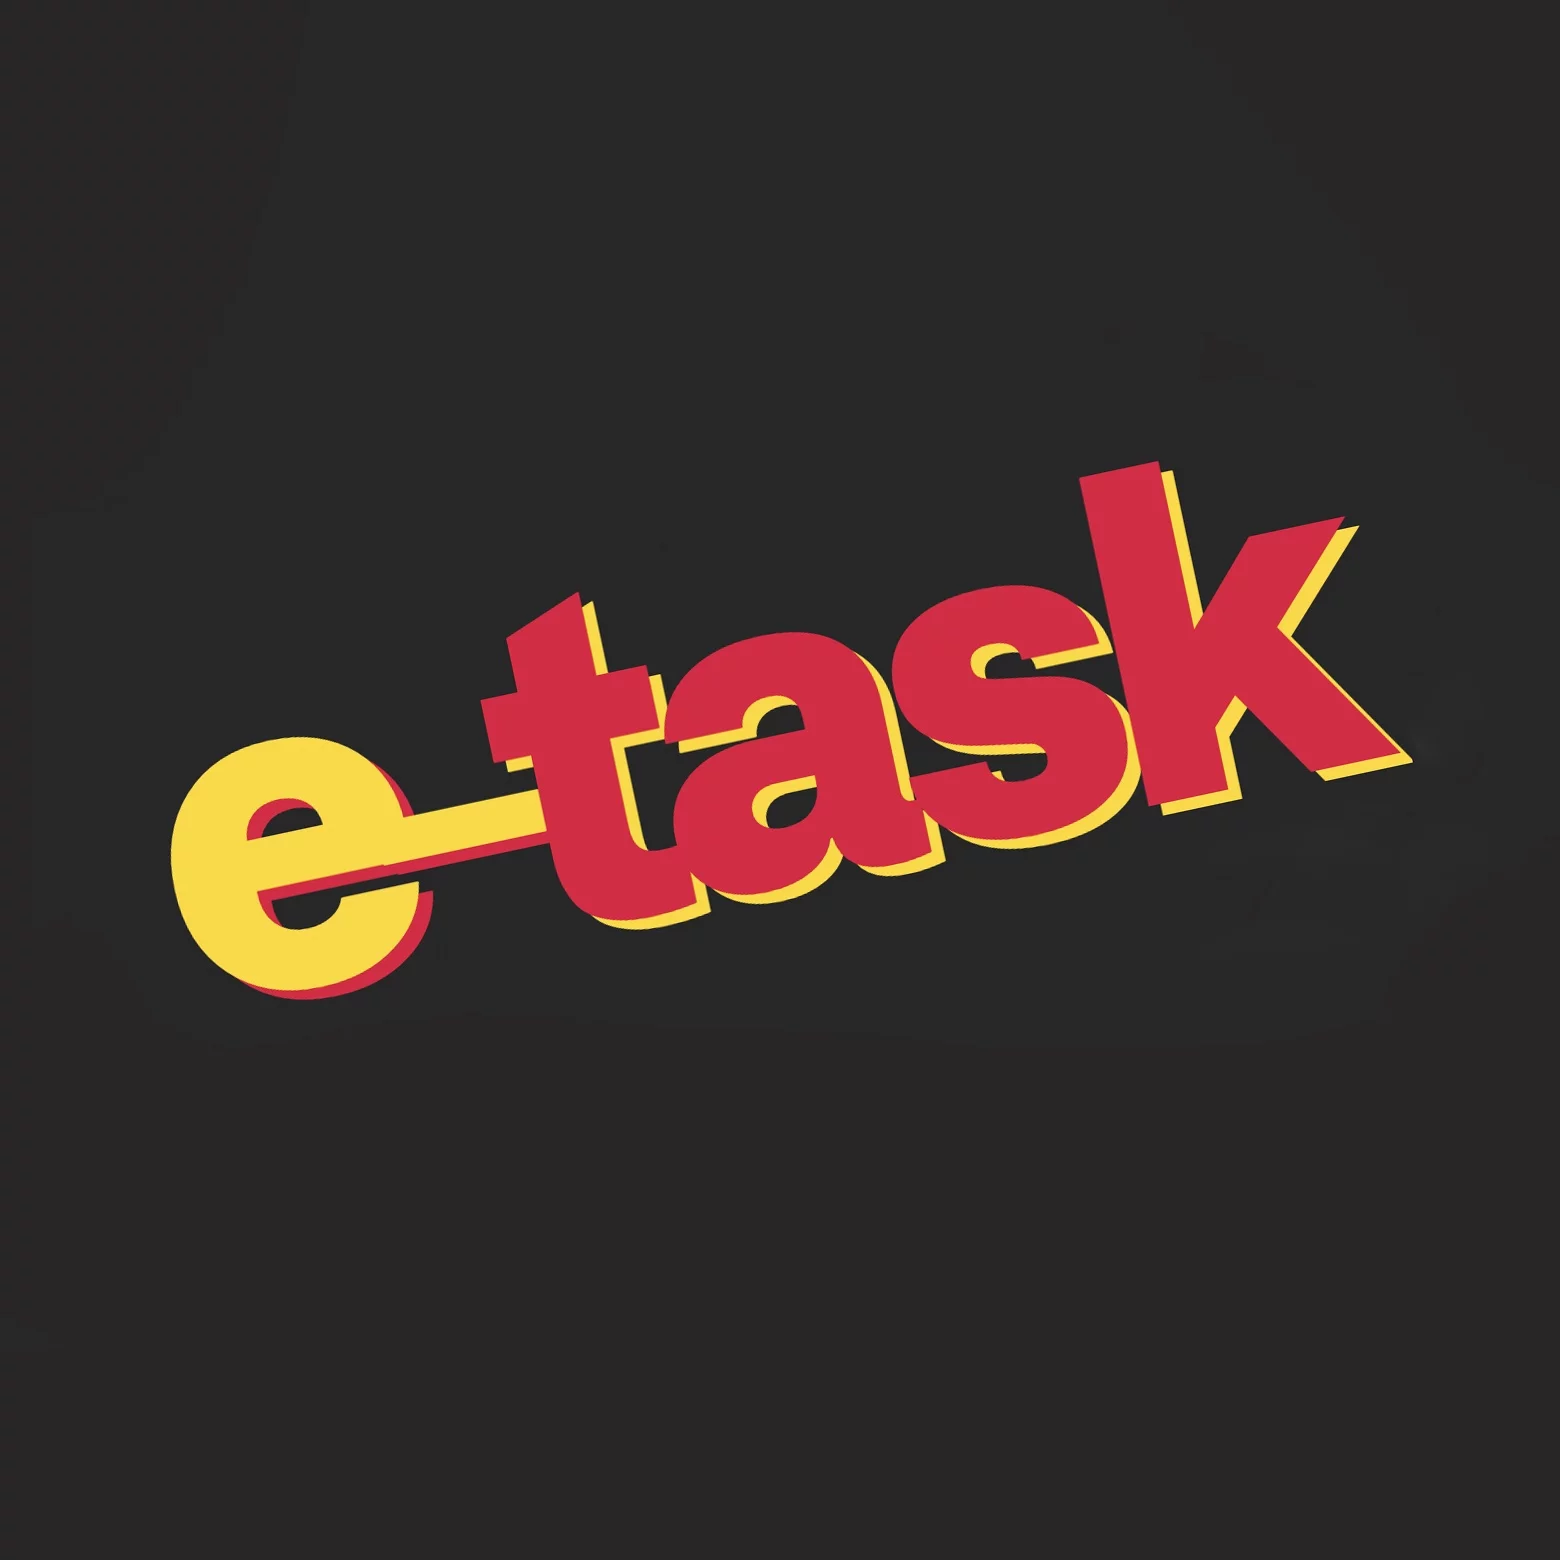 E-task